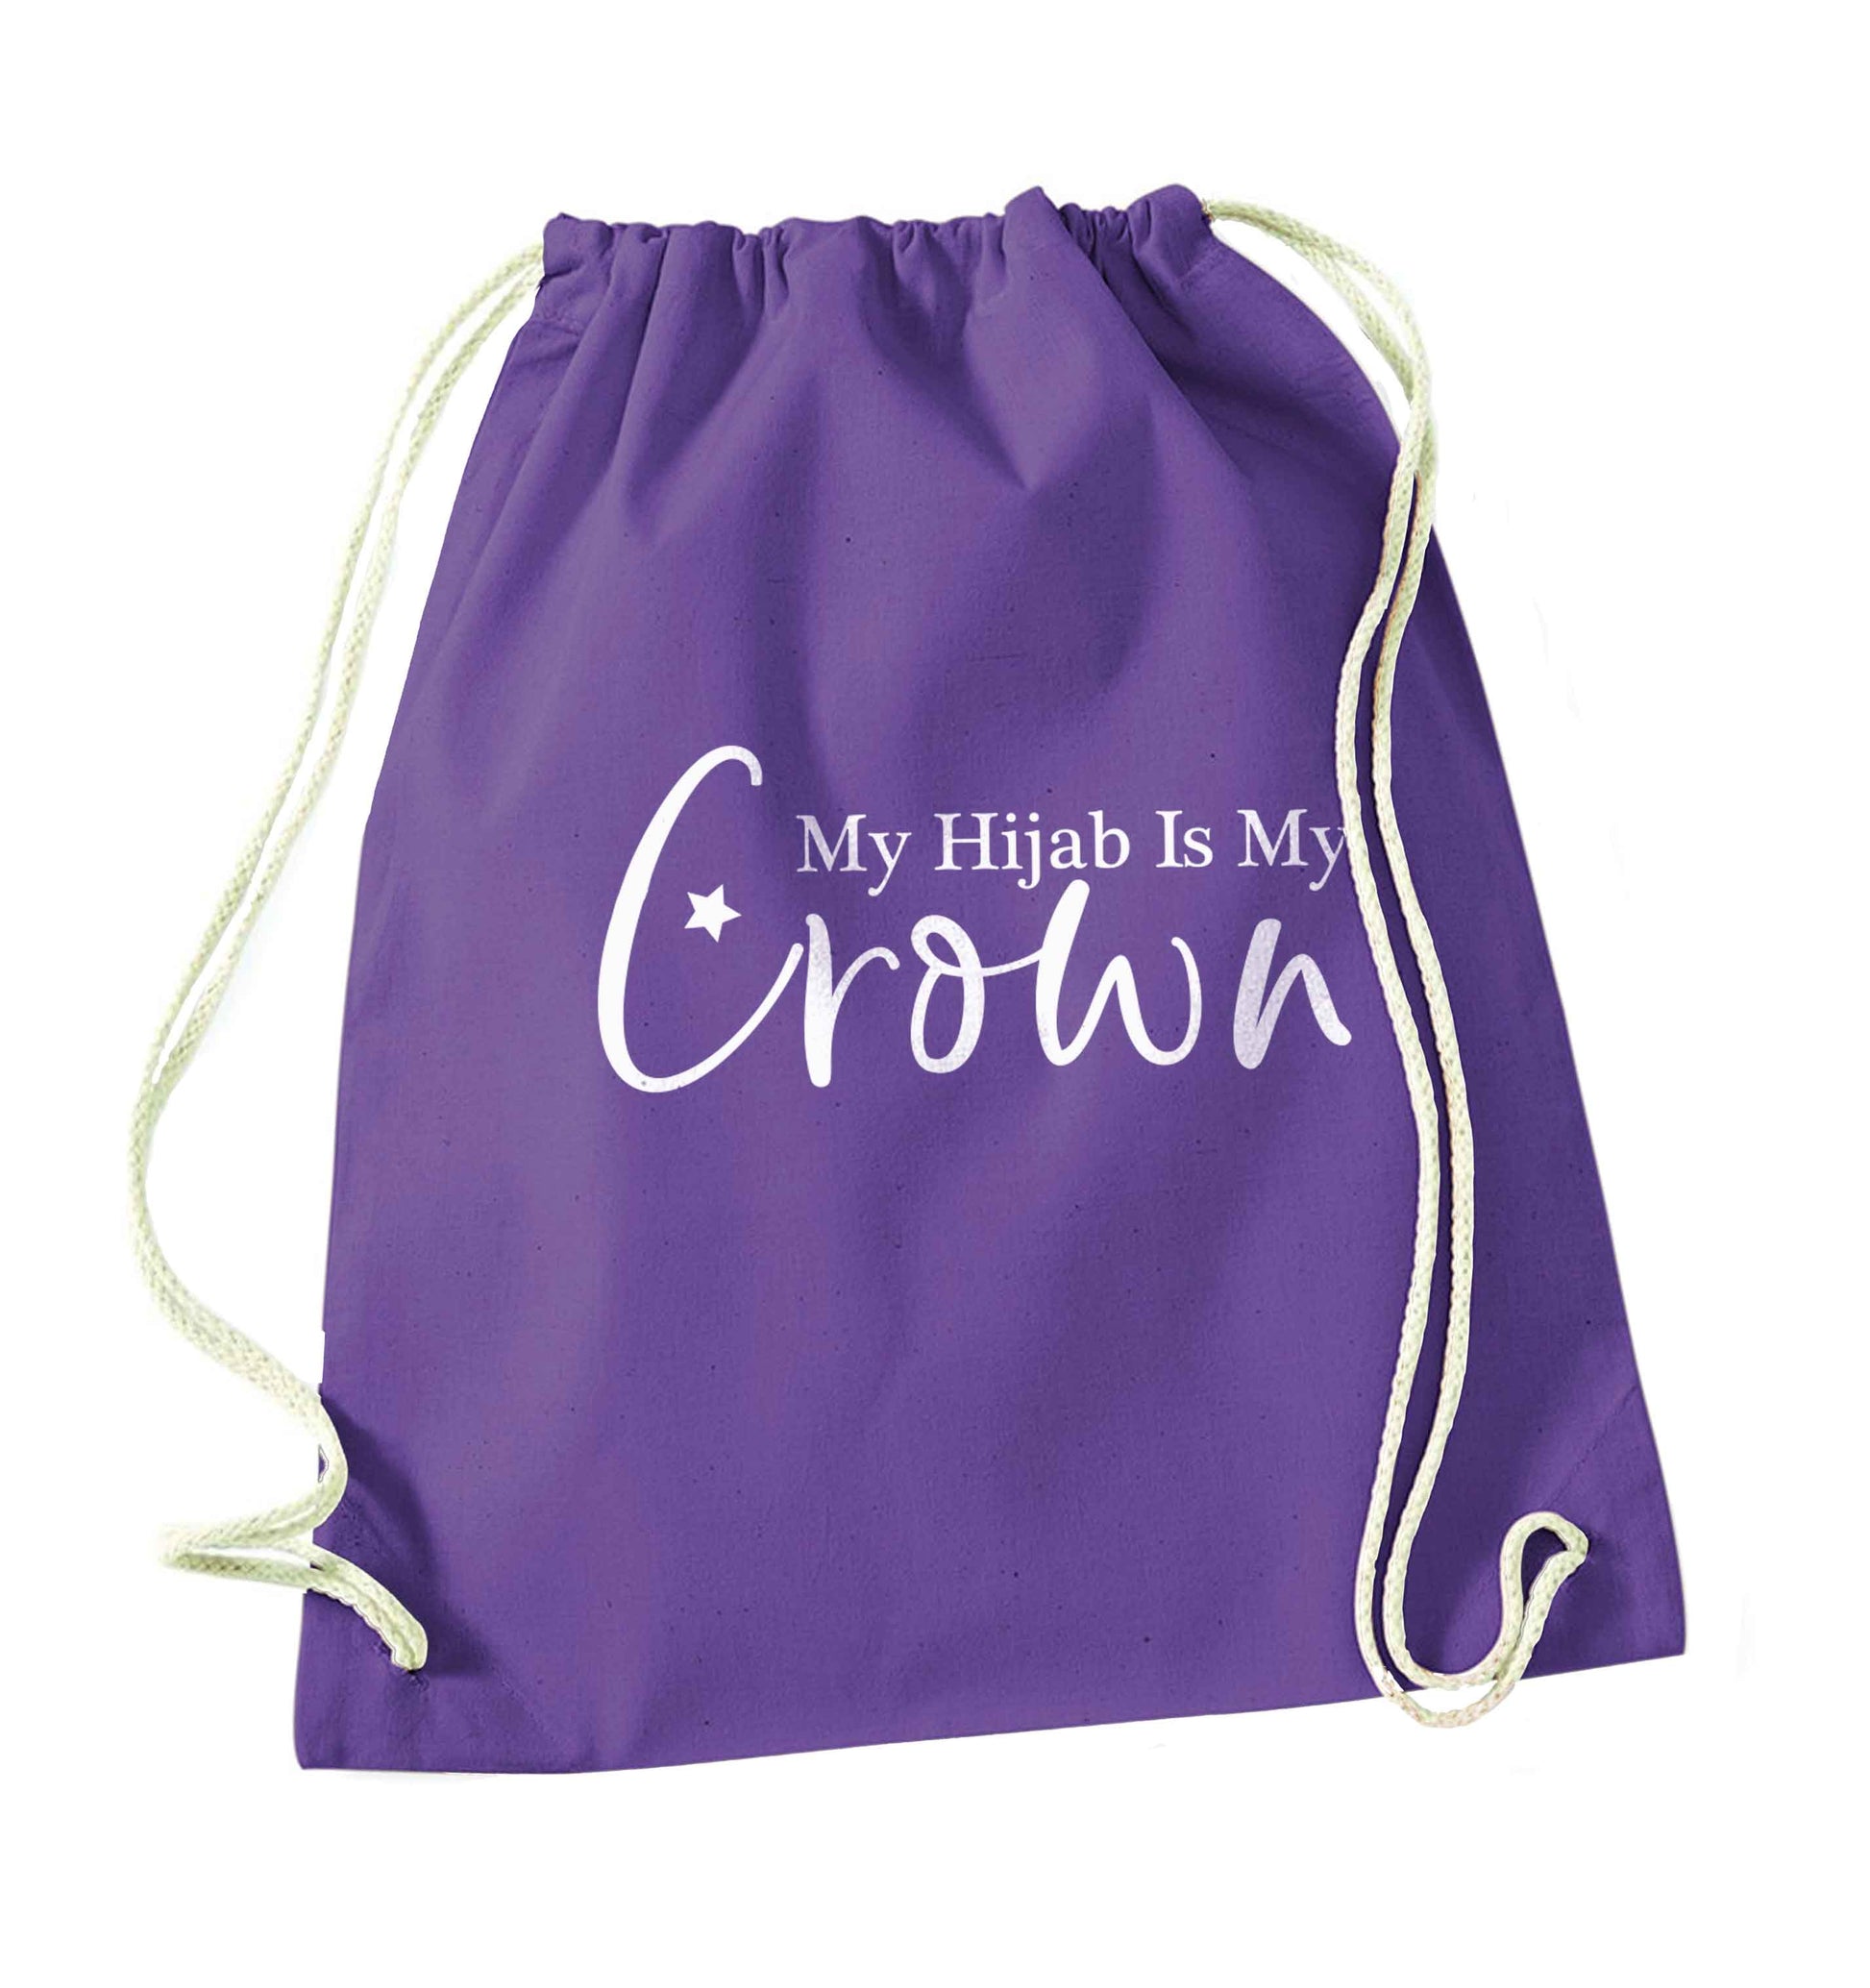 My hijab is my crown purple drawstring bag